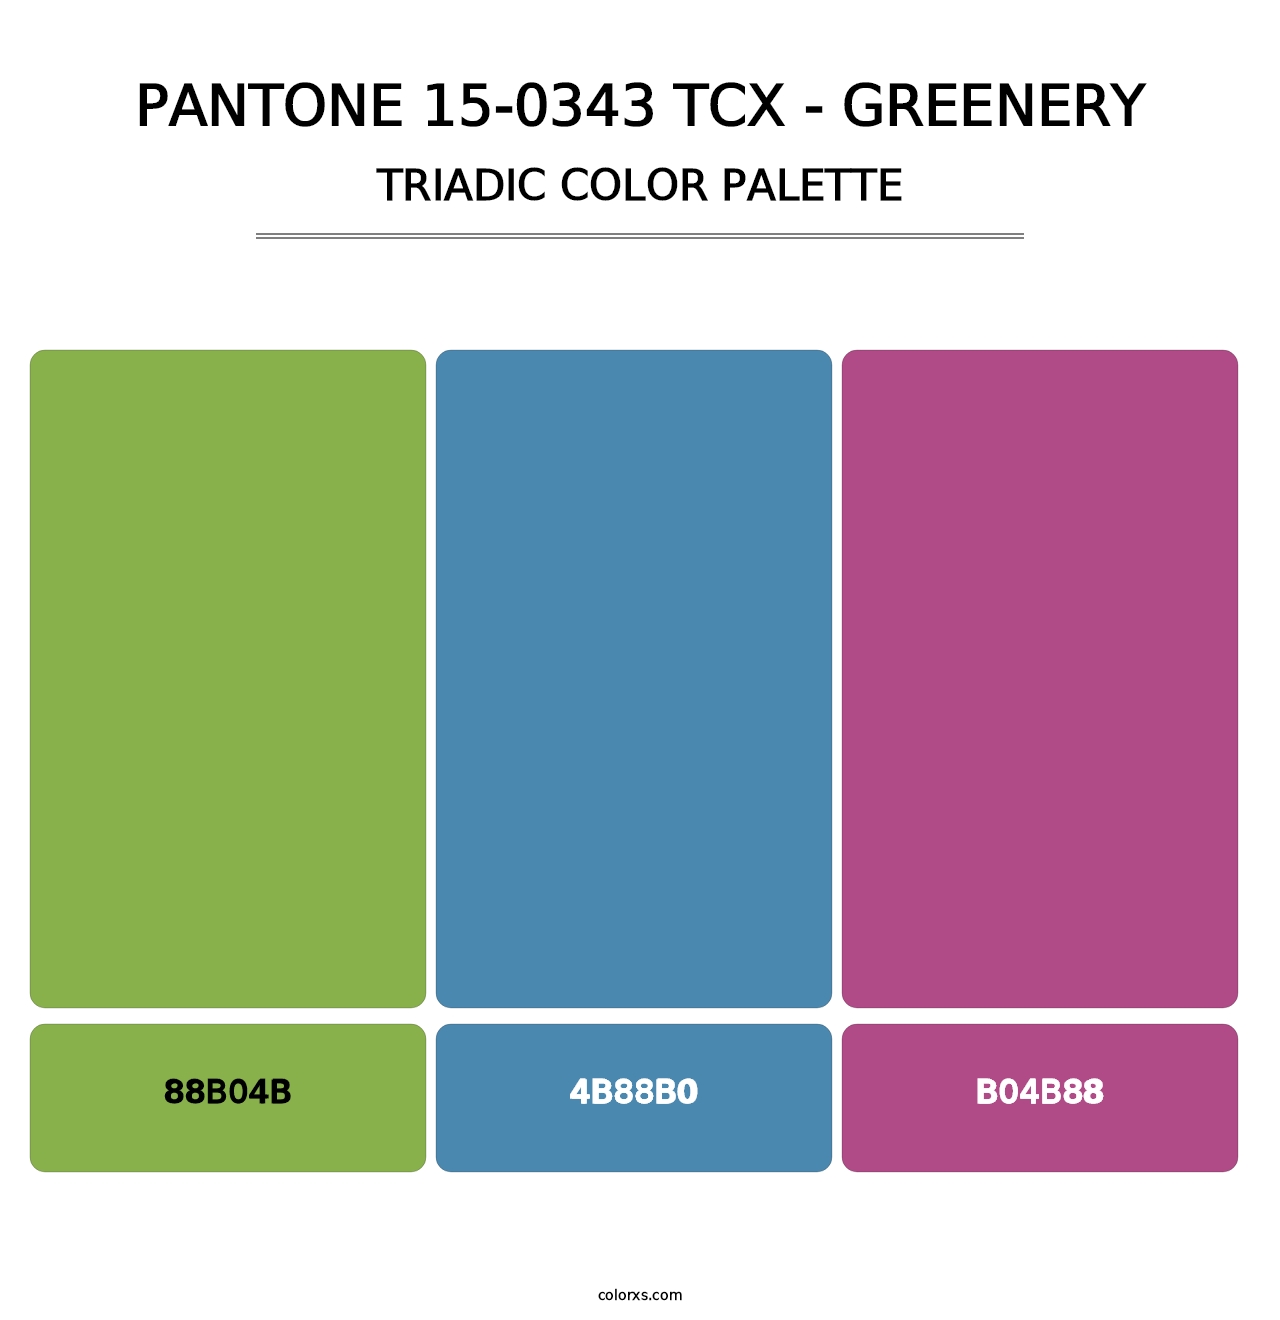 PANTONE 15-0343 TCX - Greenery - Triadic Color Palette